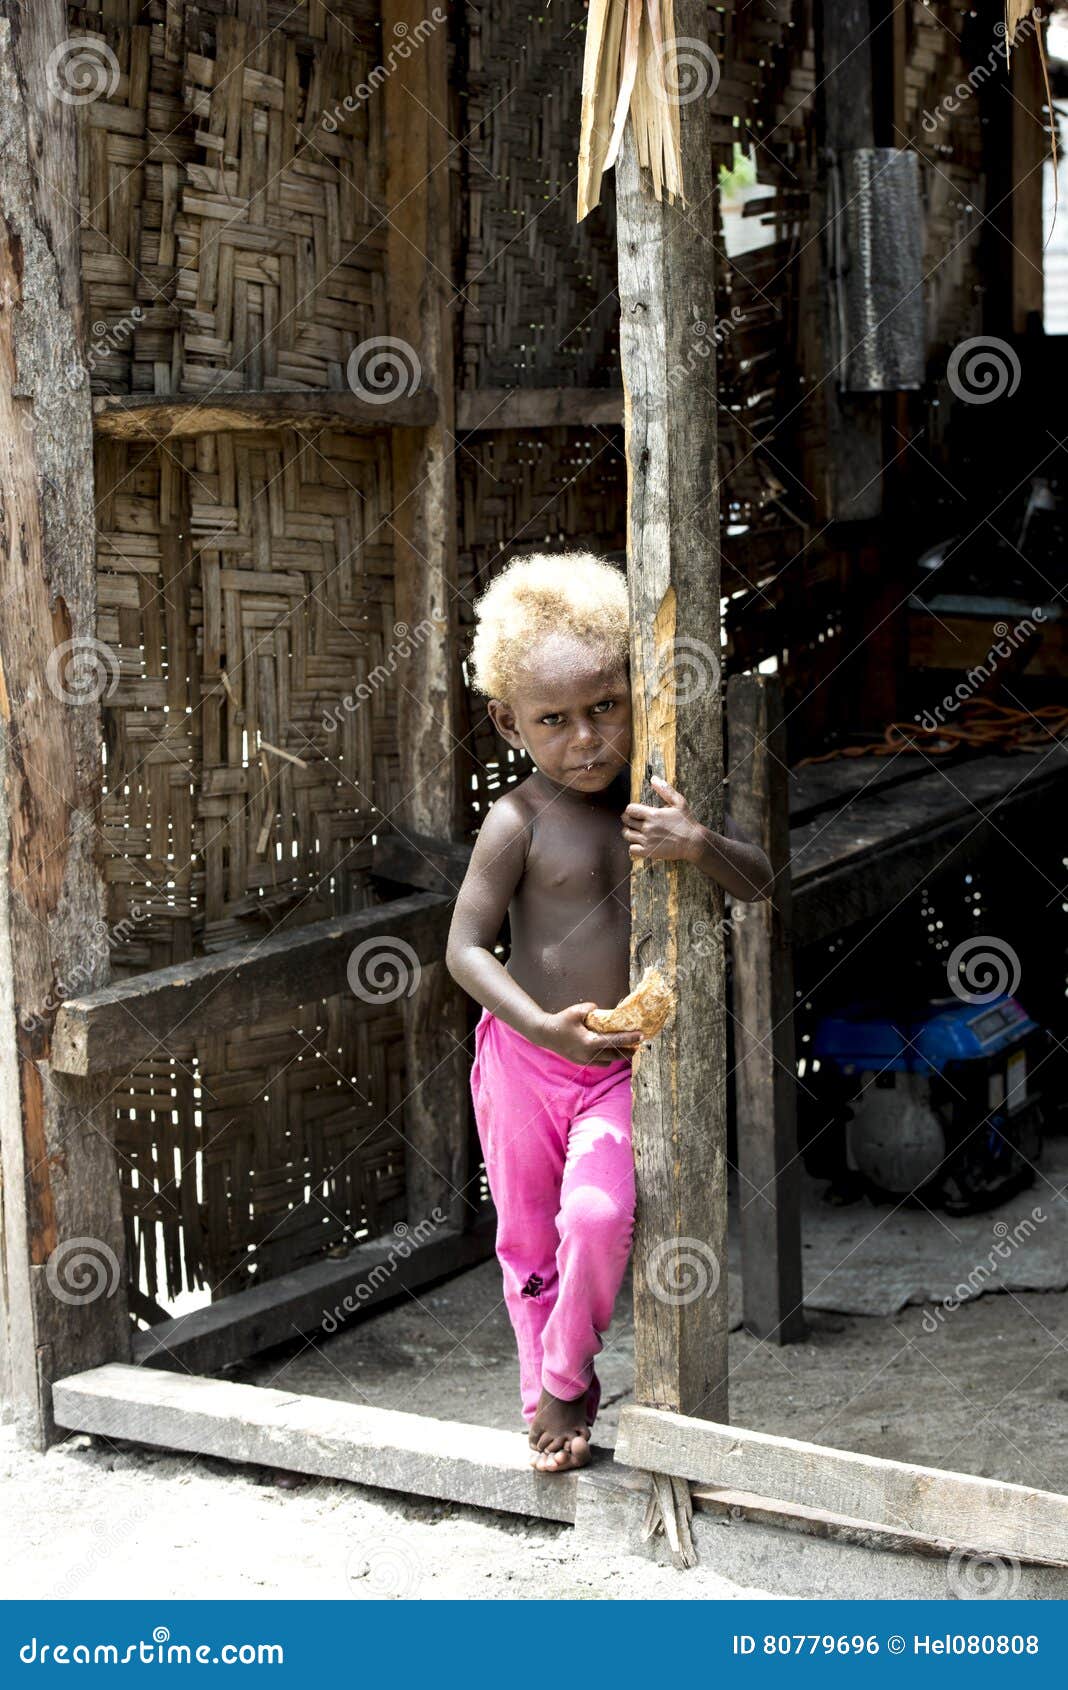 Shy Blonde Baby Girl In Handmade House Solomon Islands Editorial